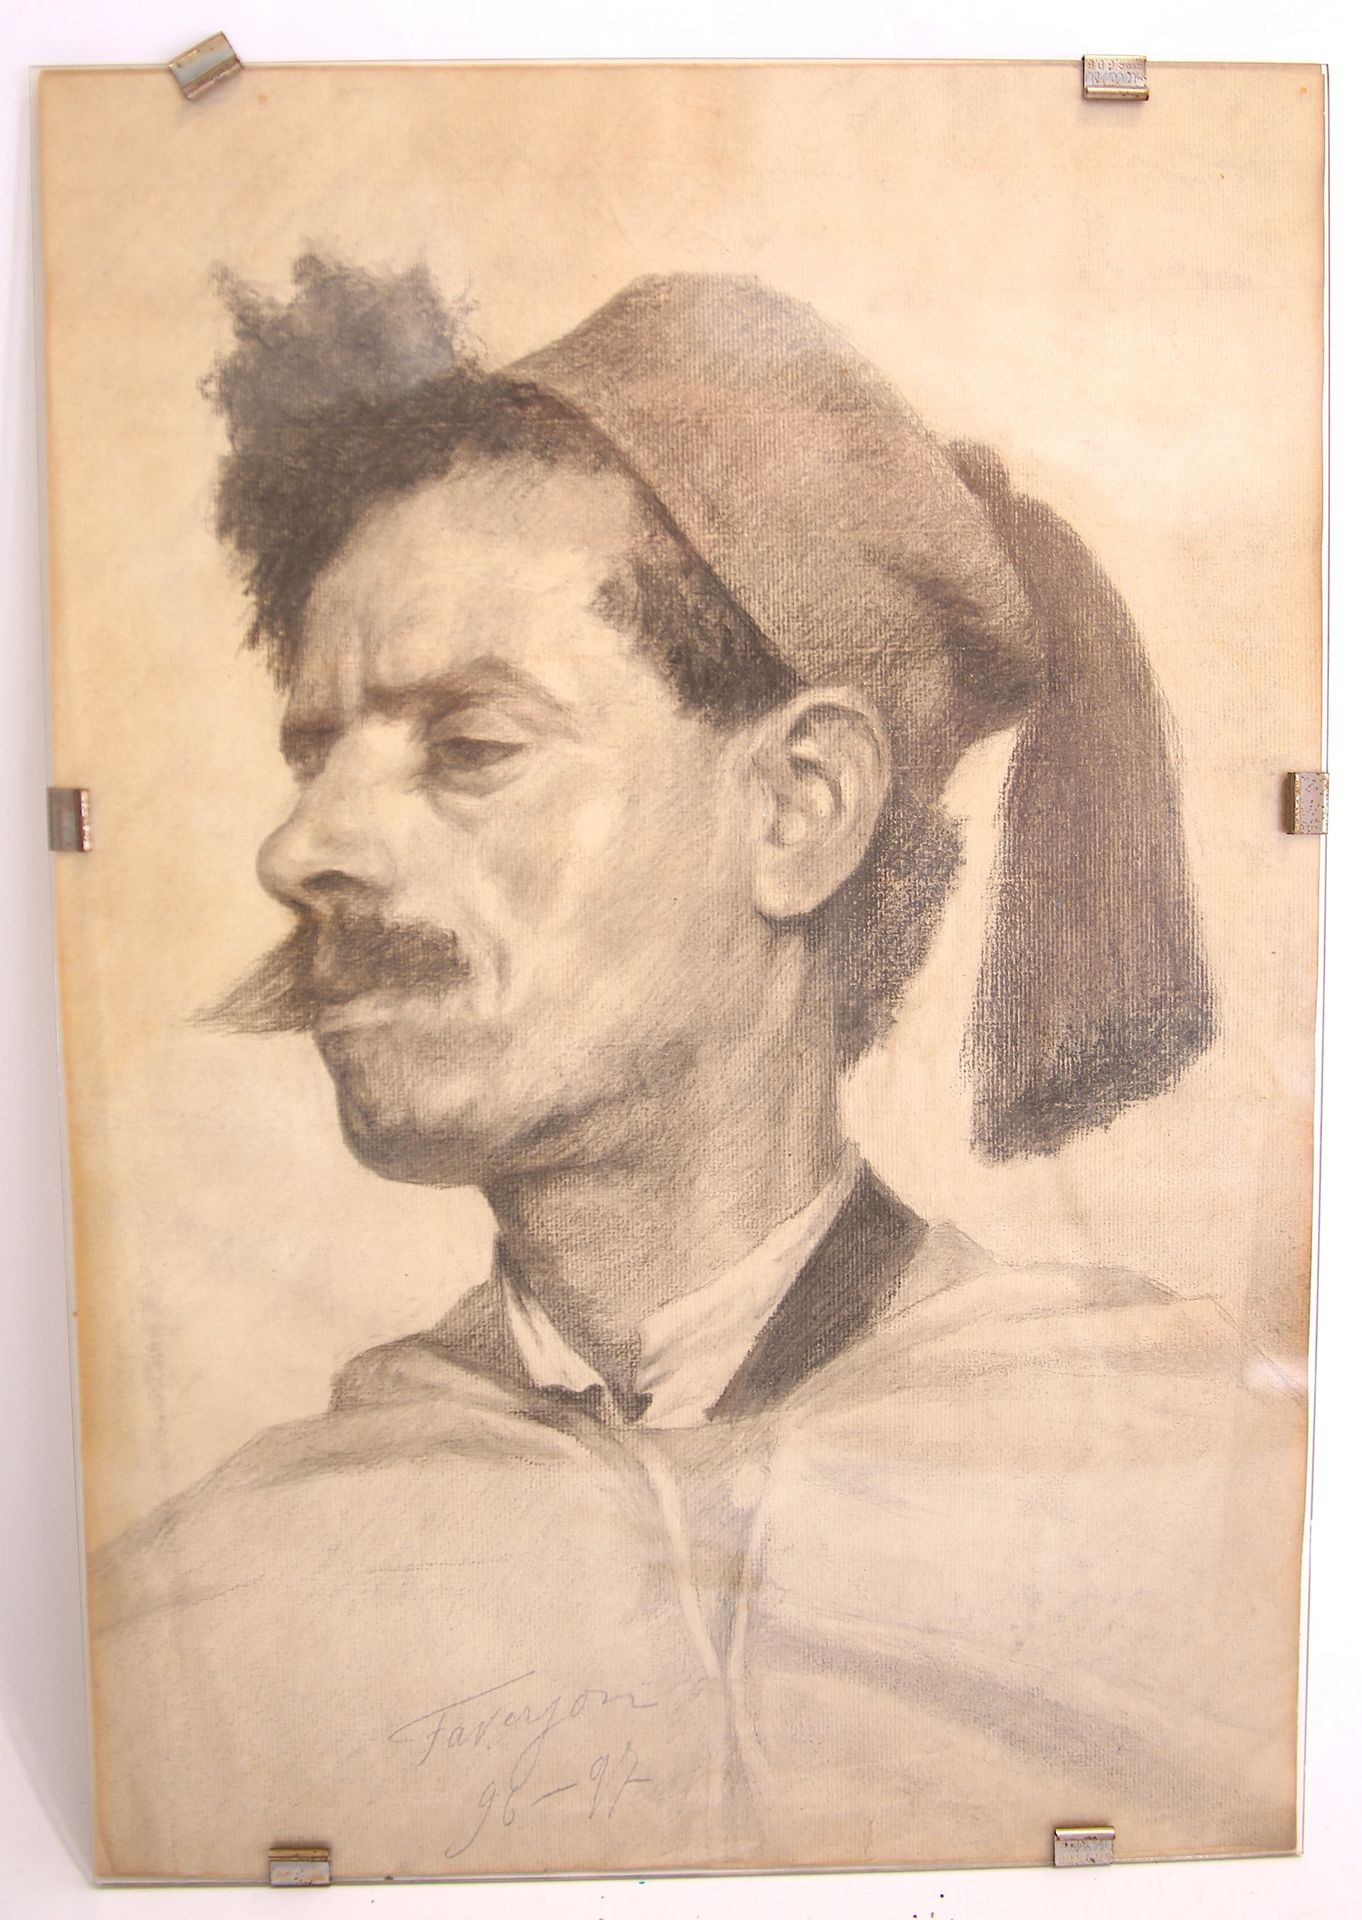 Null 
FAVERJON (finales del siglo XIX).

"Retrato de un hombre con un Fez".
Lápi&hellip;